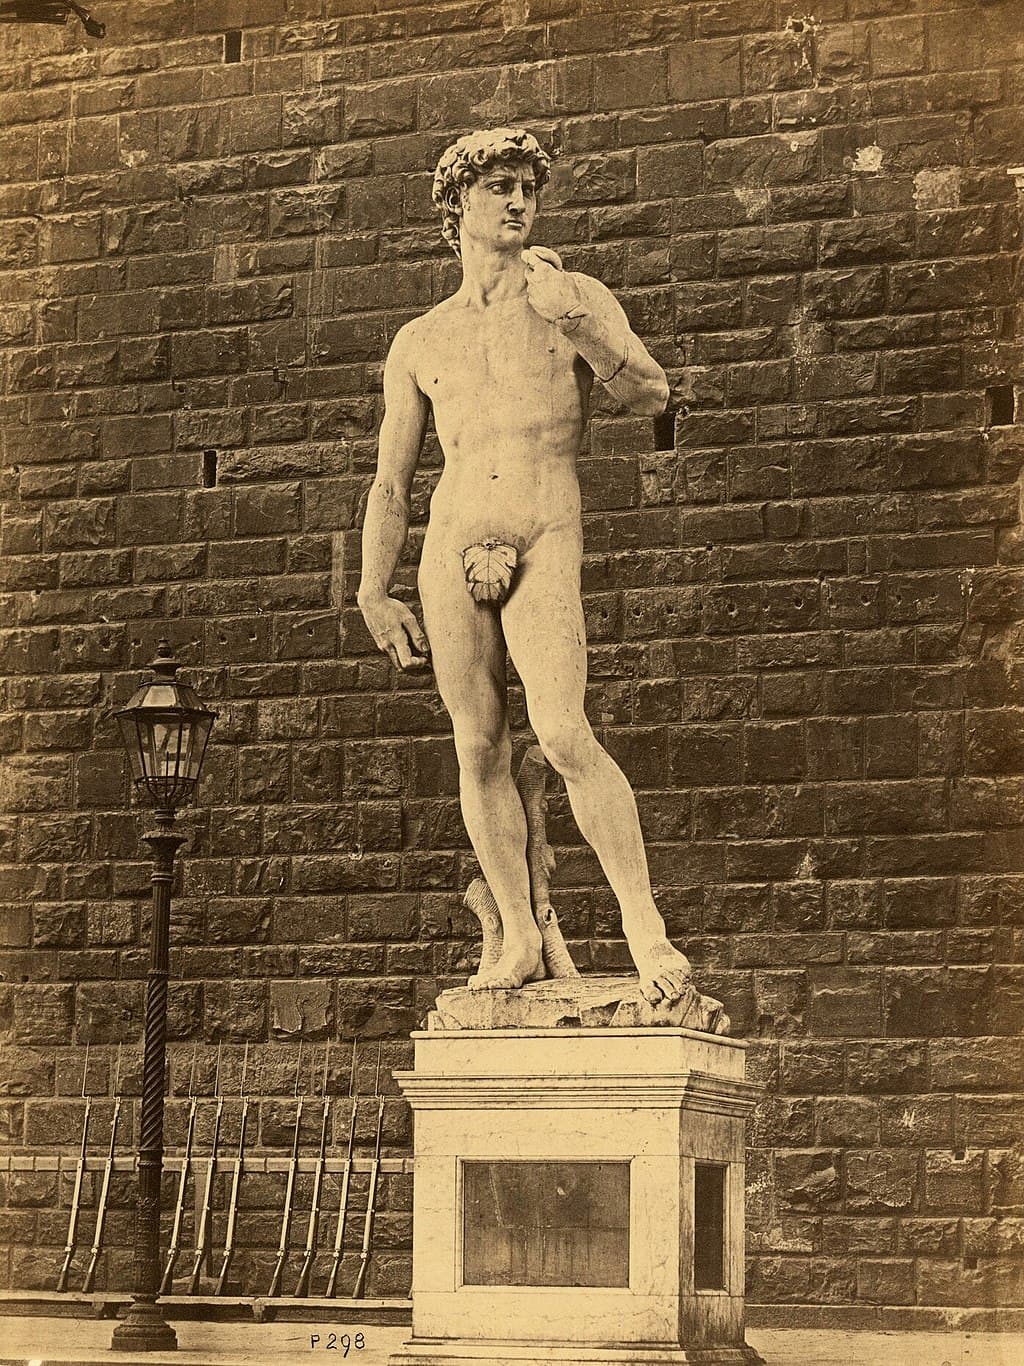 Michelangelo’s “David” in its original location, 1873